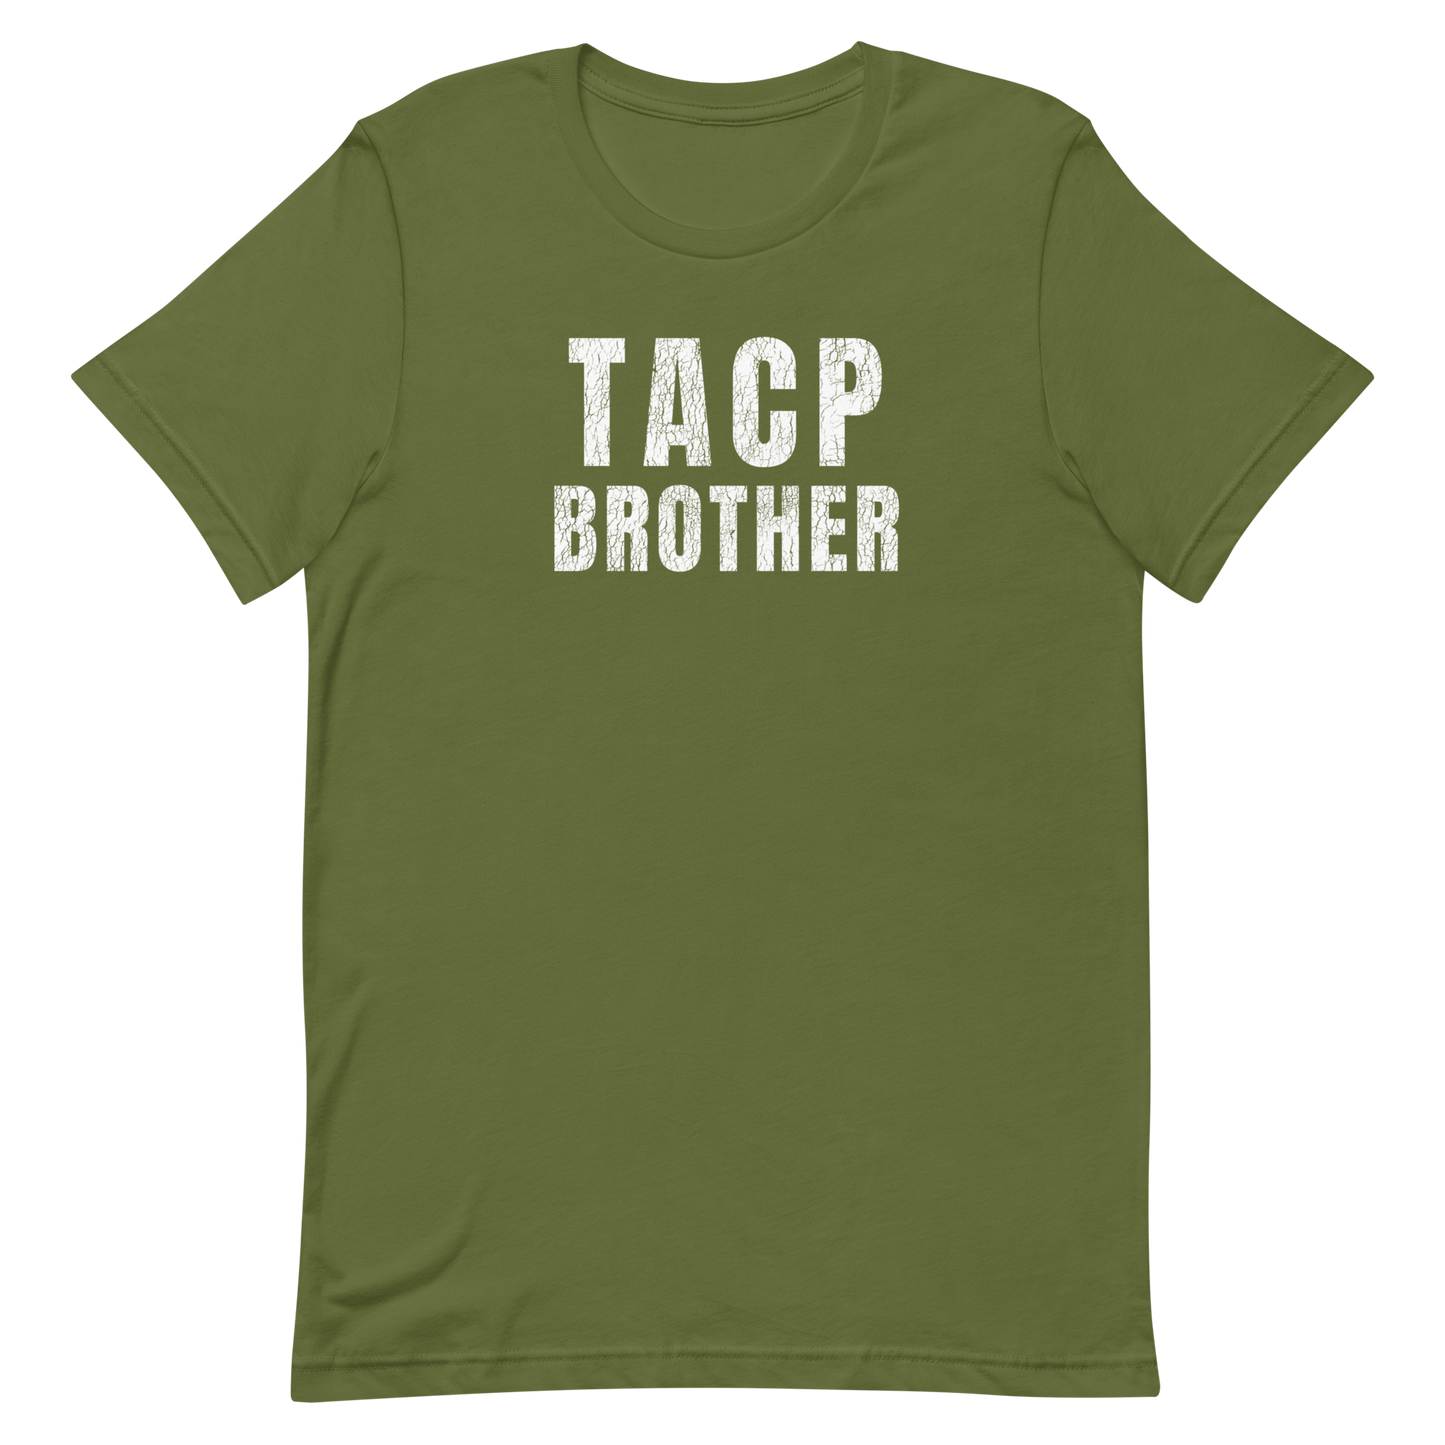 TACP Brother Tee